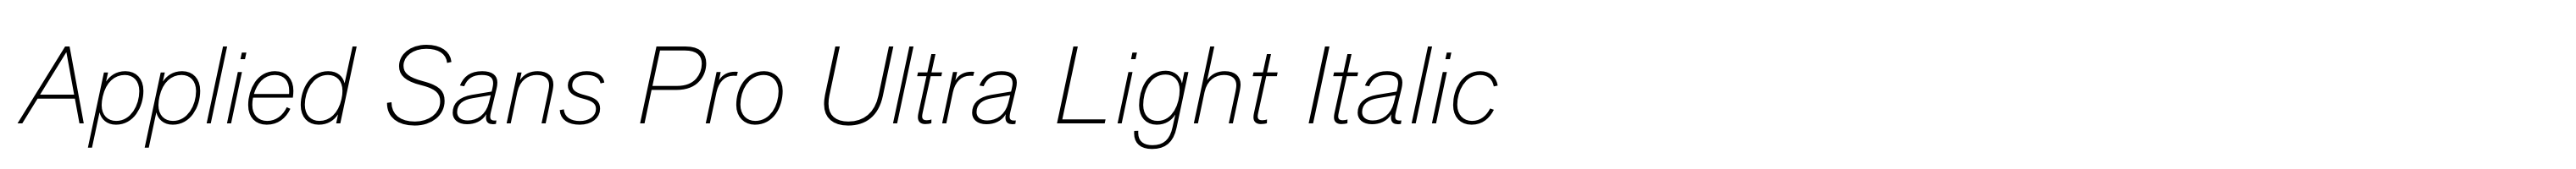 Applied Sans Pro Ultra Light Italic